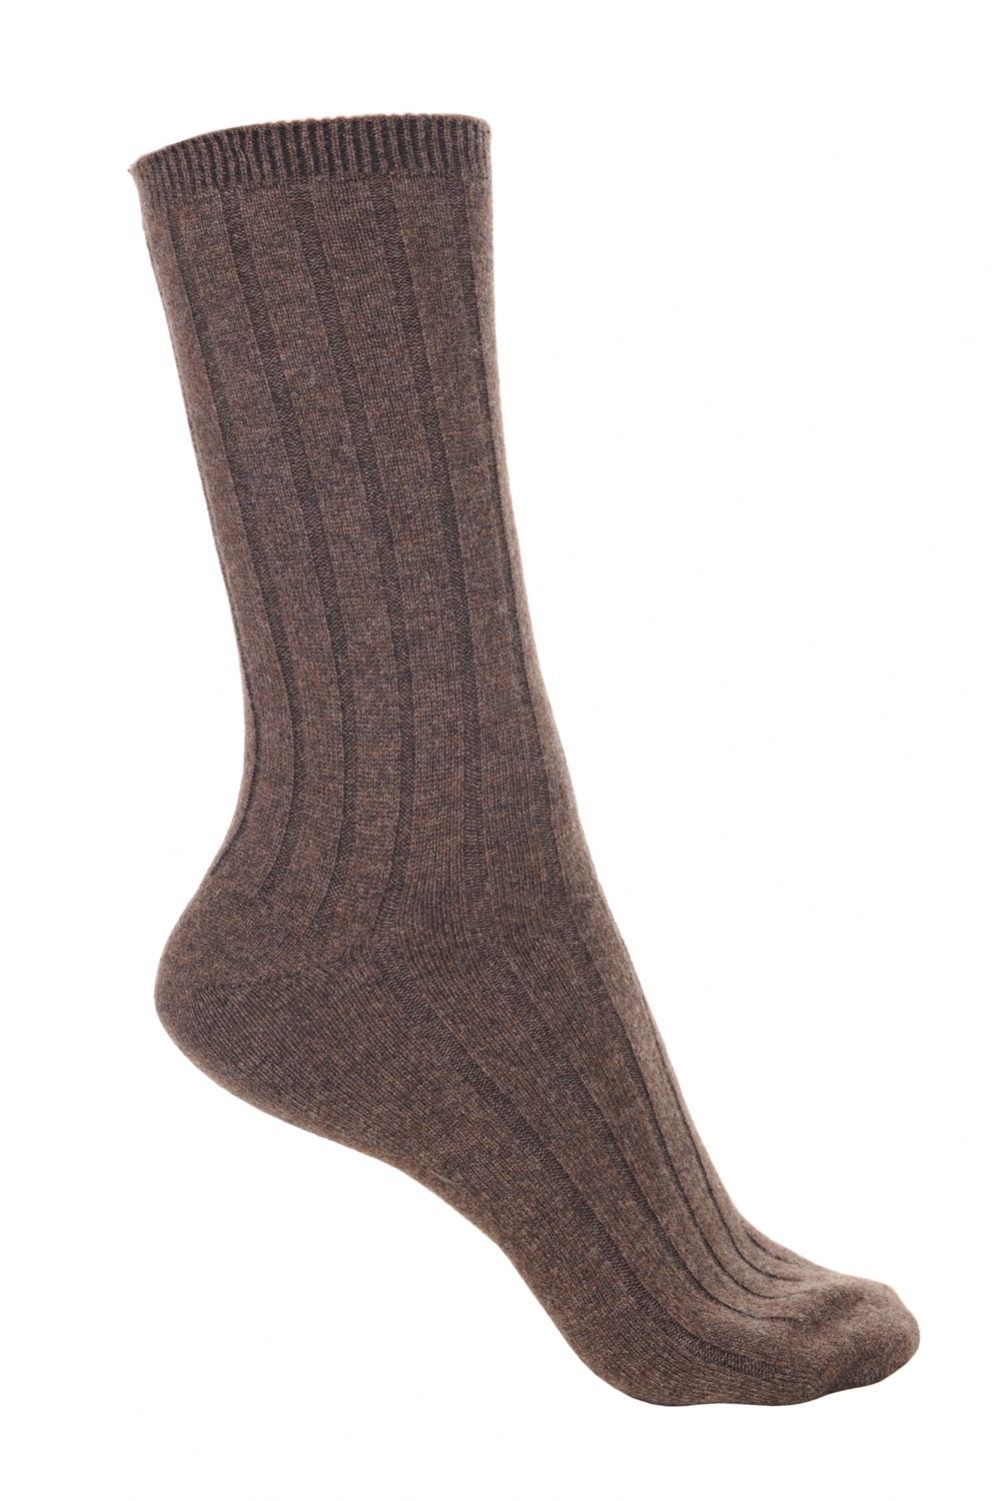 Cashmere & Elastane accessories socks dragibus m marron chine 5 5 8 39 42 